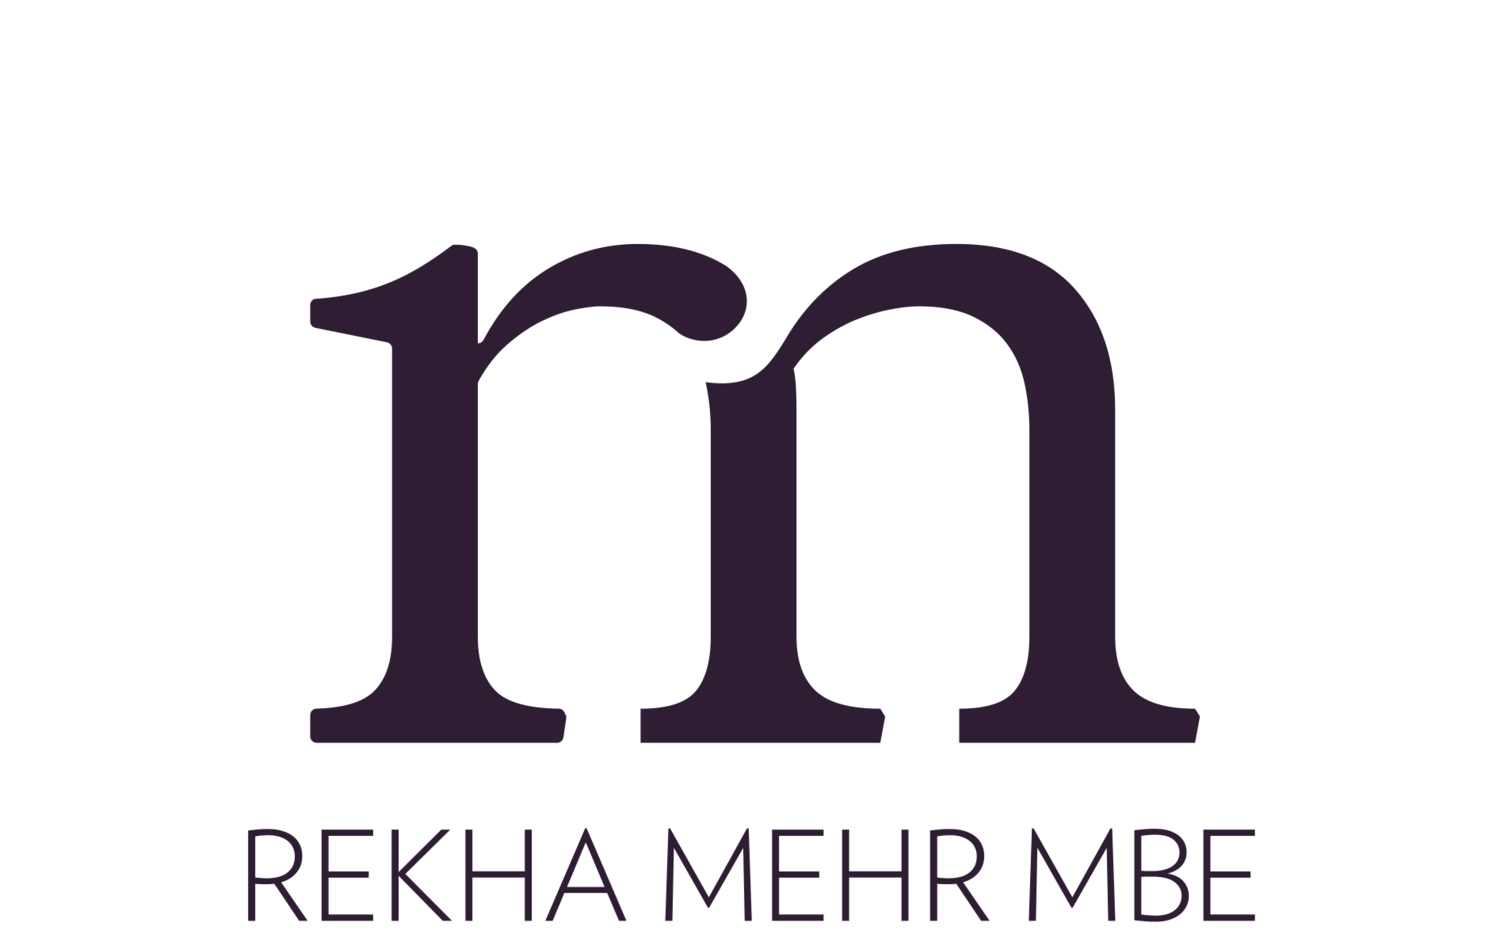 Rekha Mehr MBE